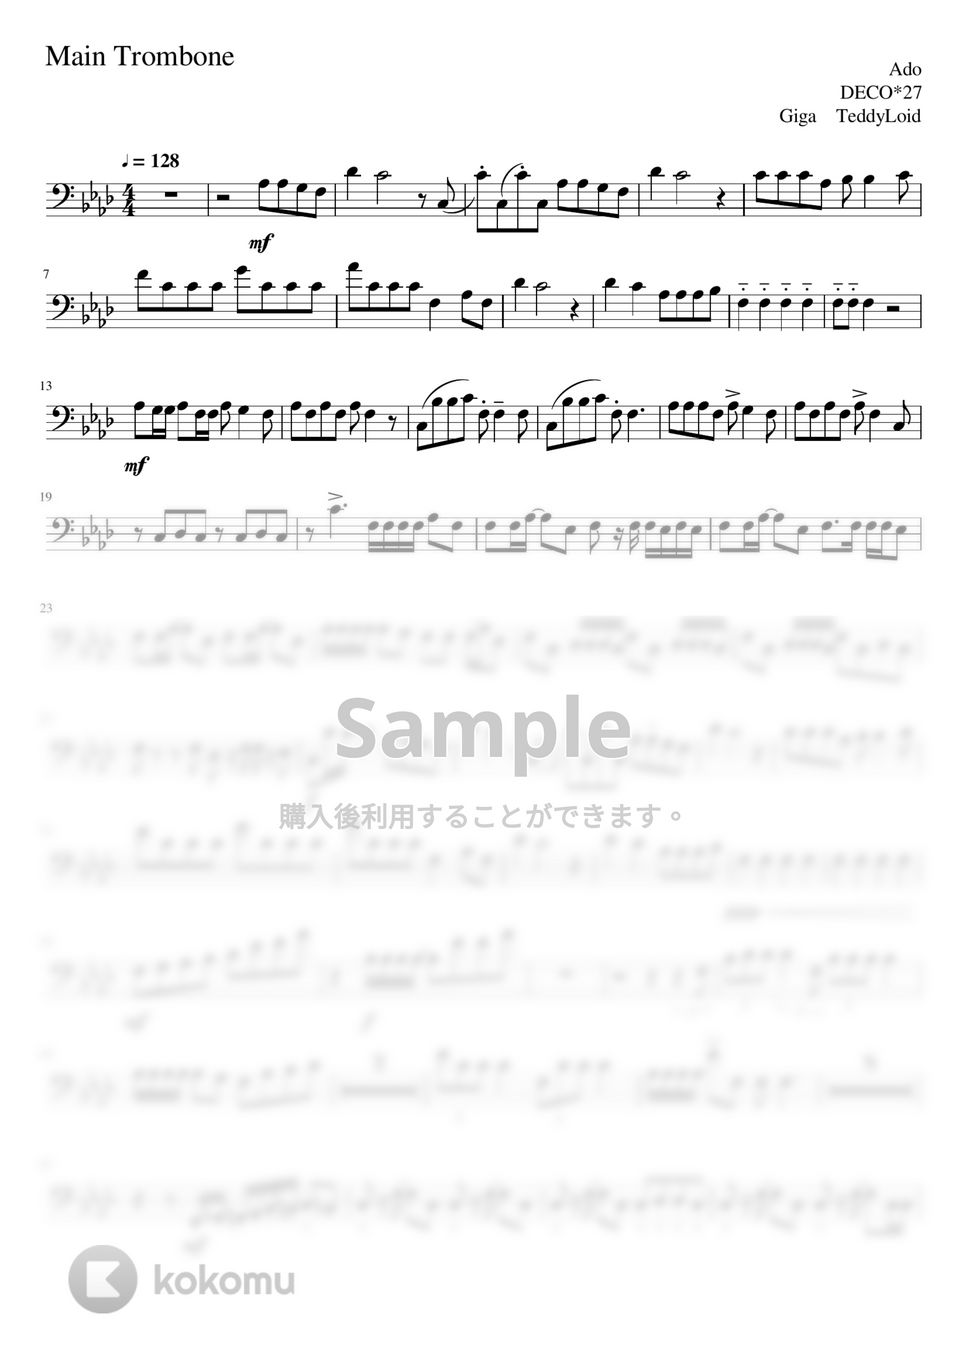 Ado - 踊 (-Trombone Solo- 原キー) by Creampuff